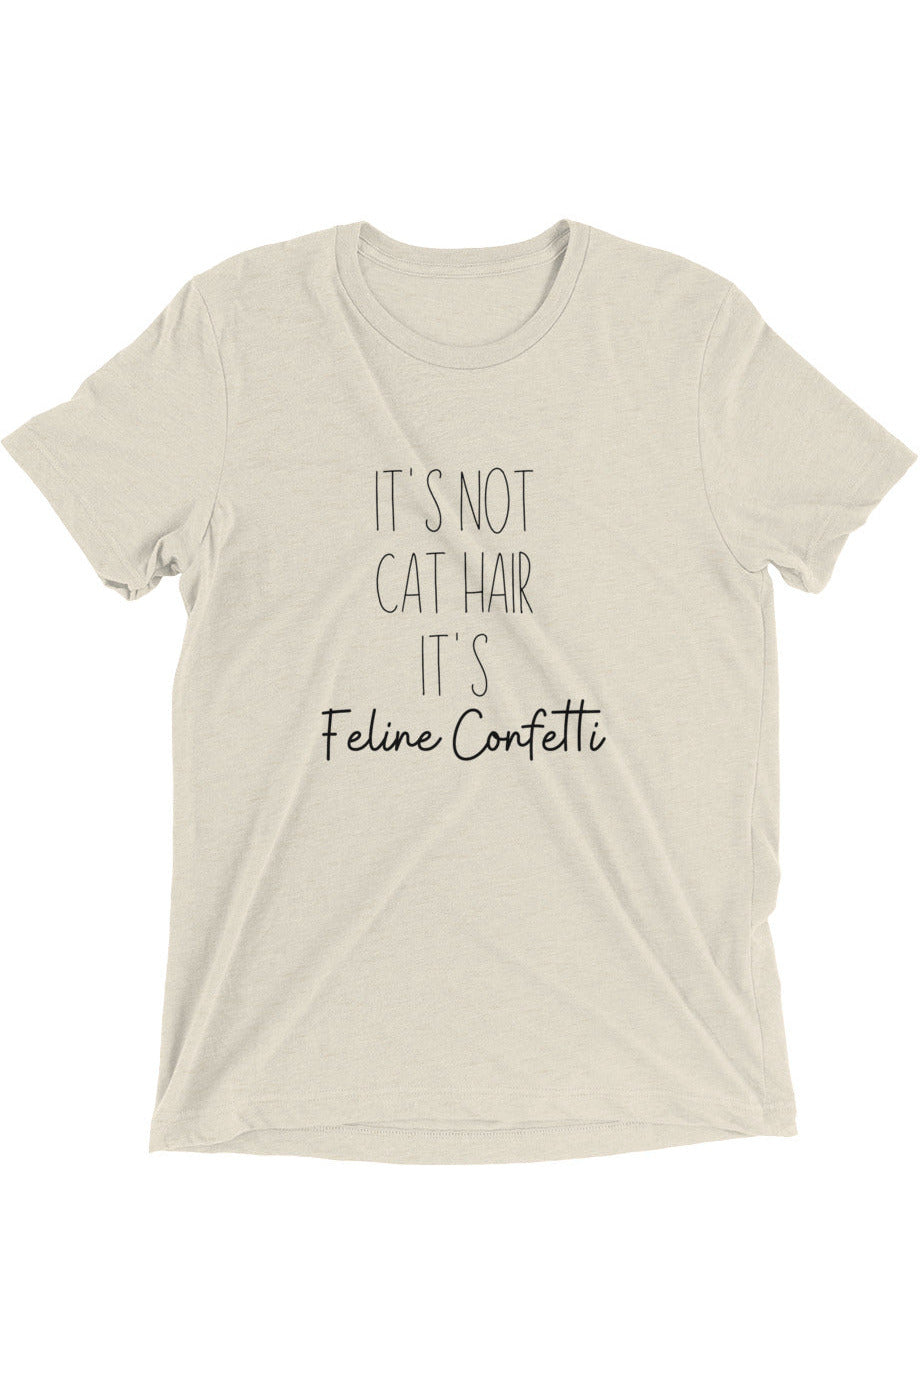 "Feline Confetti" - Short sleeve t-shirt